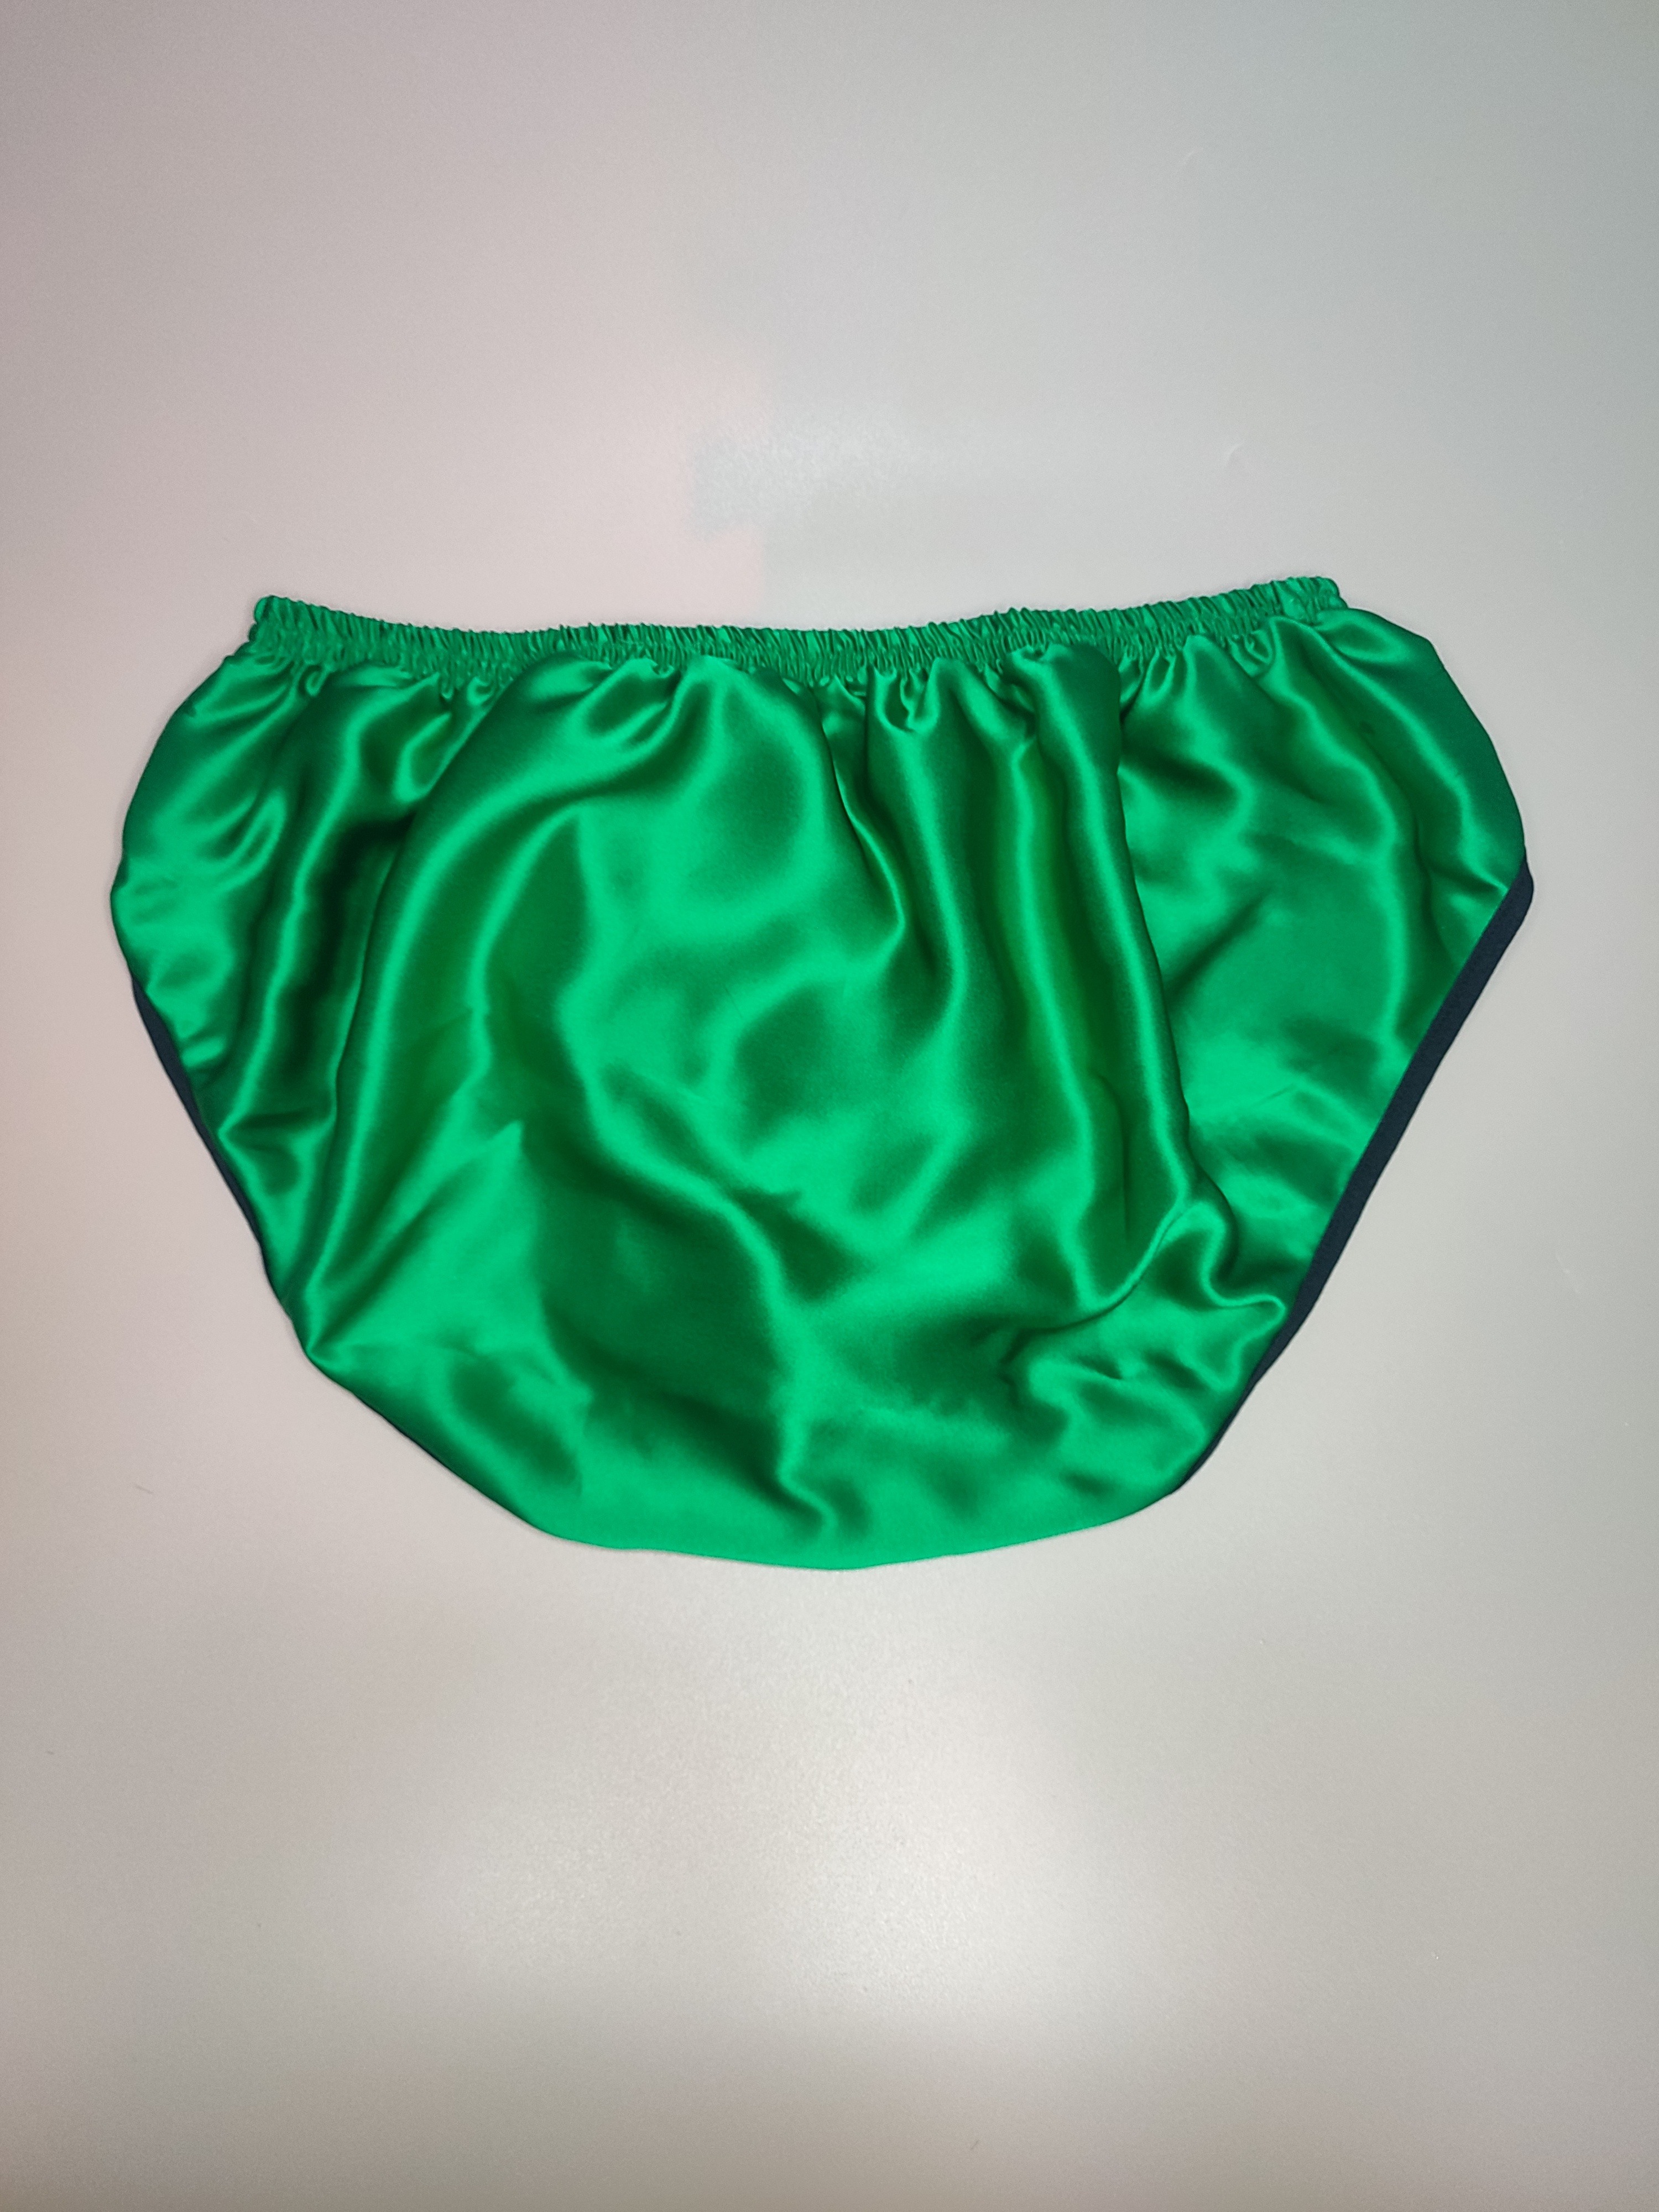 Green Silk High Waist French Cut Panties - Soft Strokes Silk